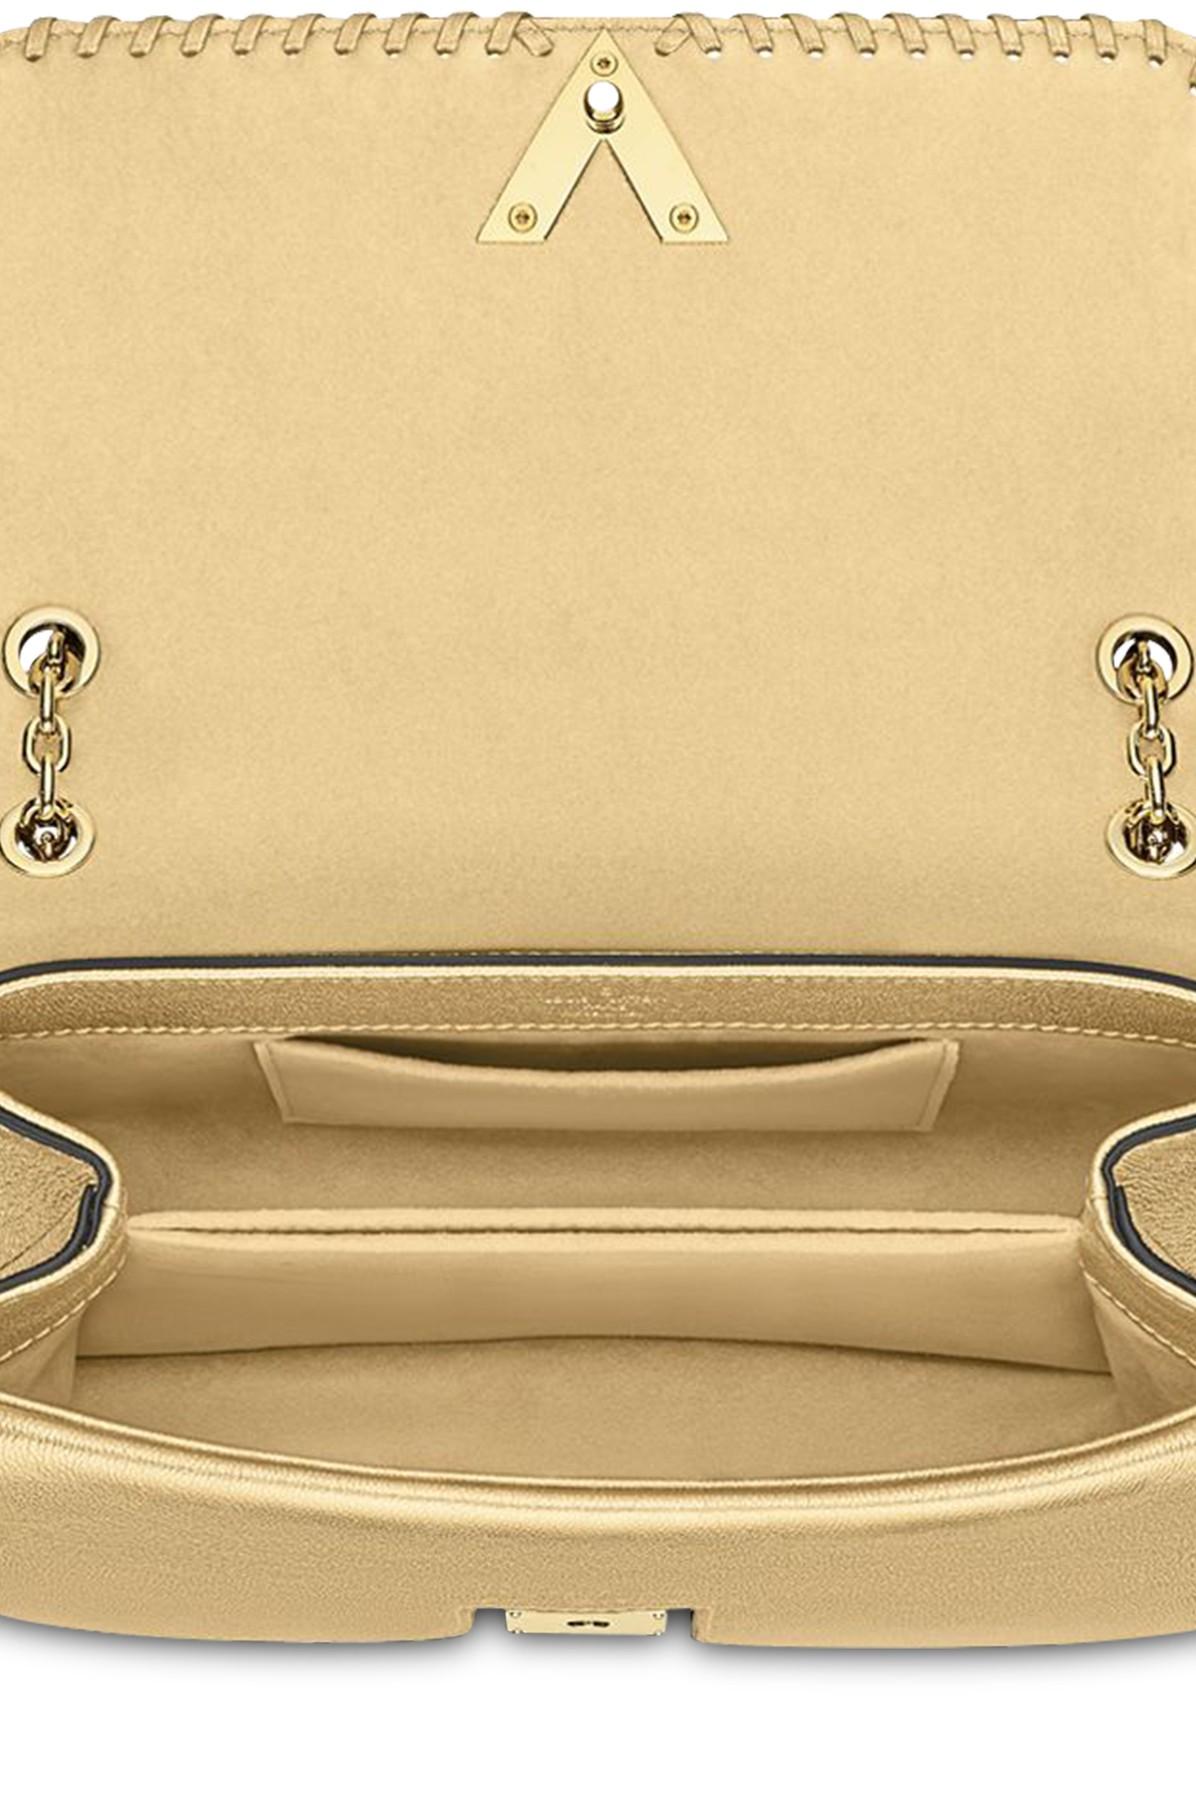 Louis Vuitton Gold Metallic Leather Braided Around Very Chain Bag